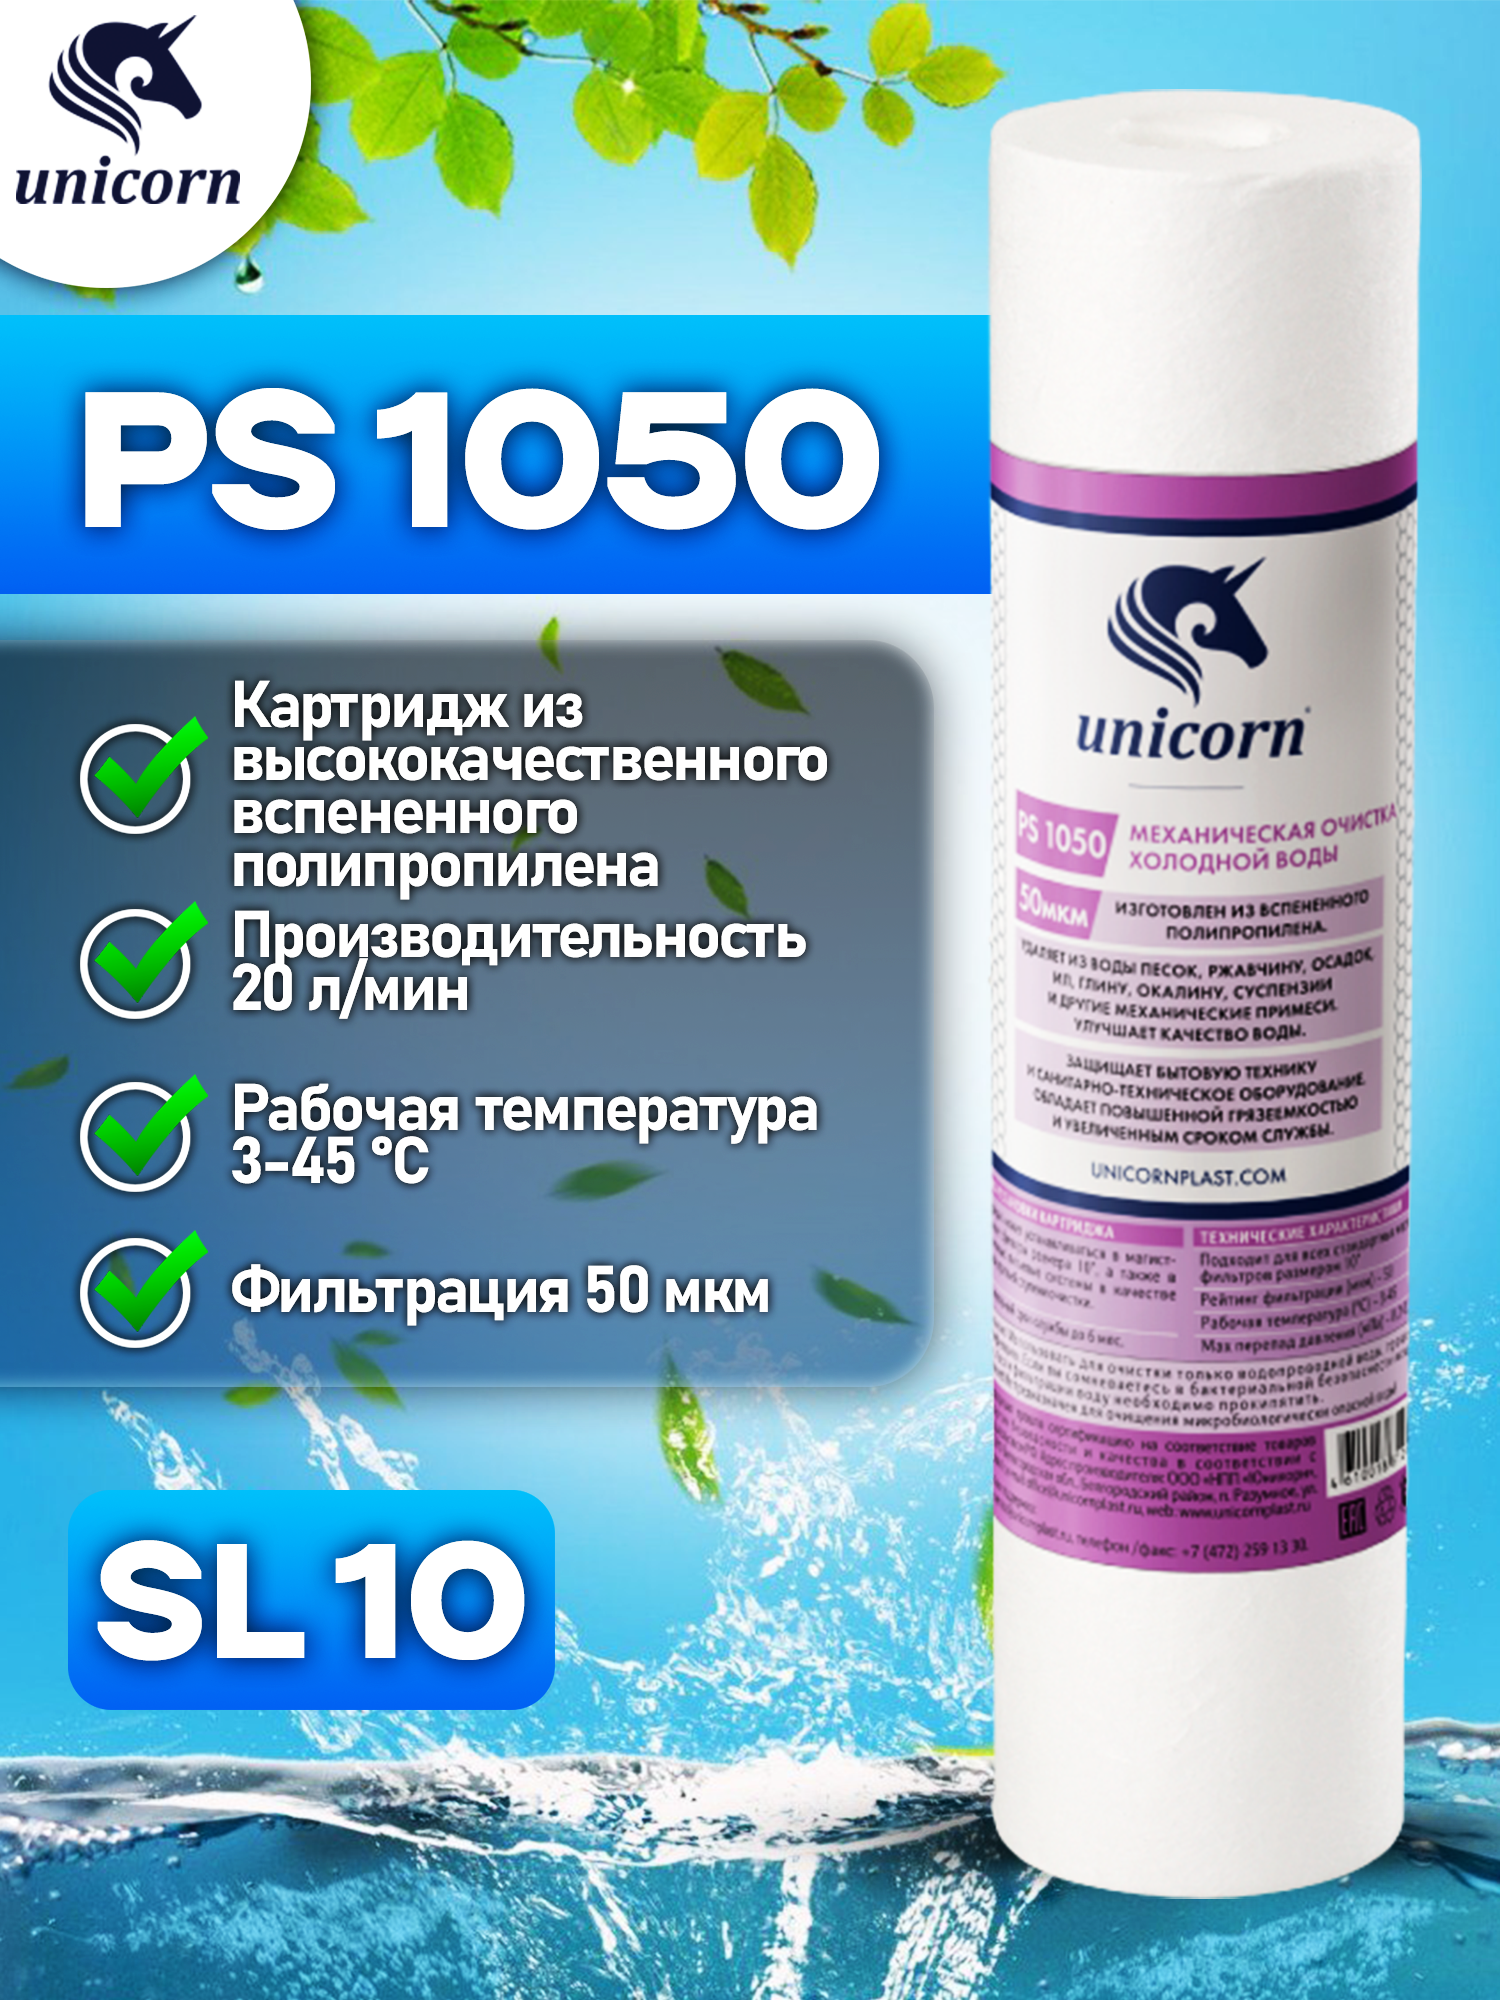 Unicorn PS1050 Картридж из полипропиленового волокна, 1 шт.